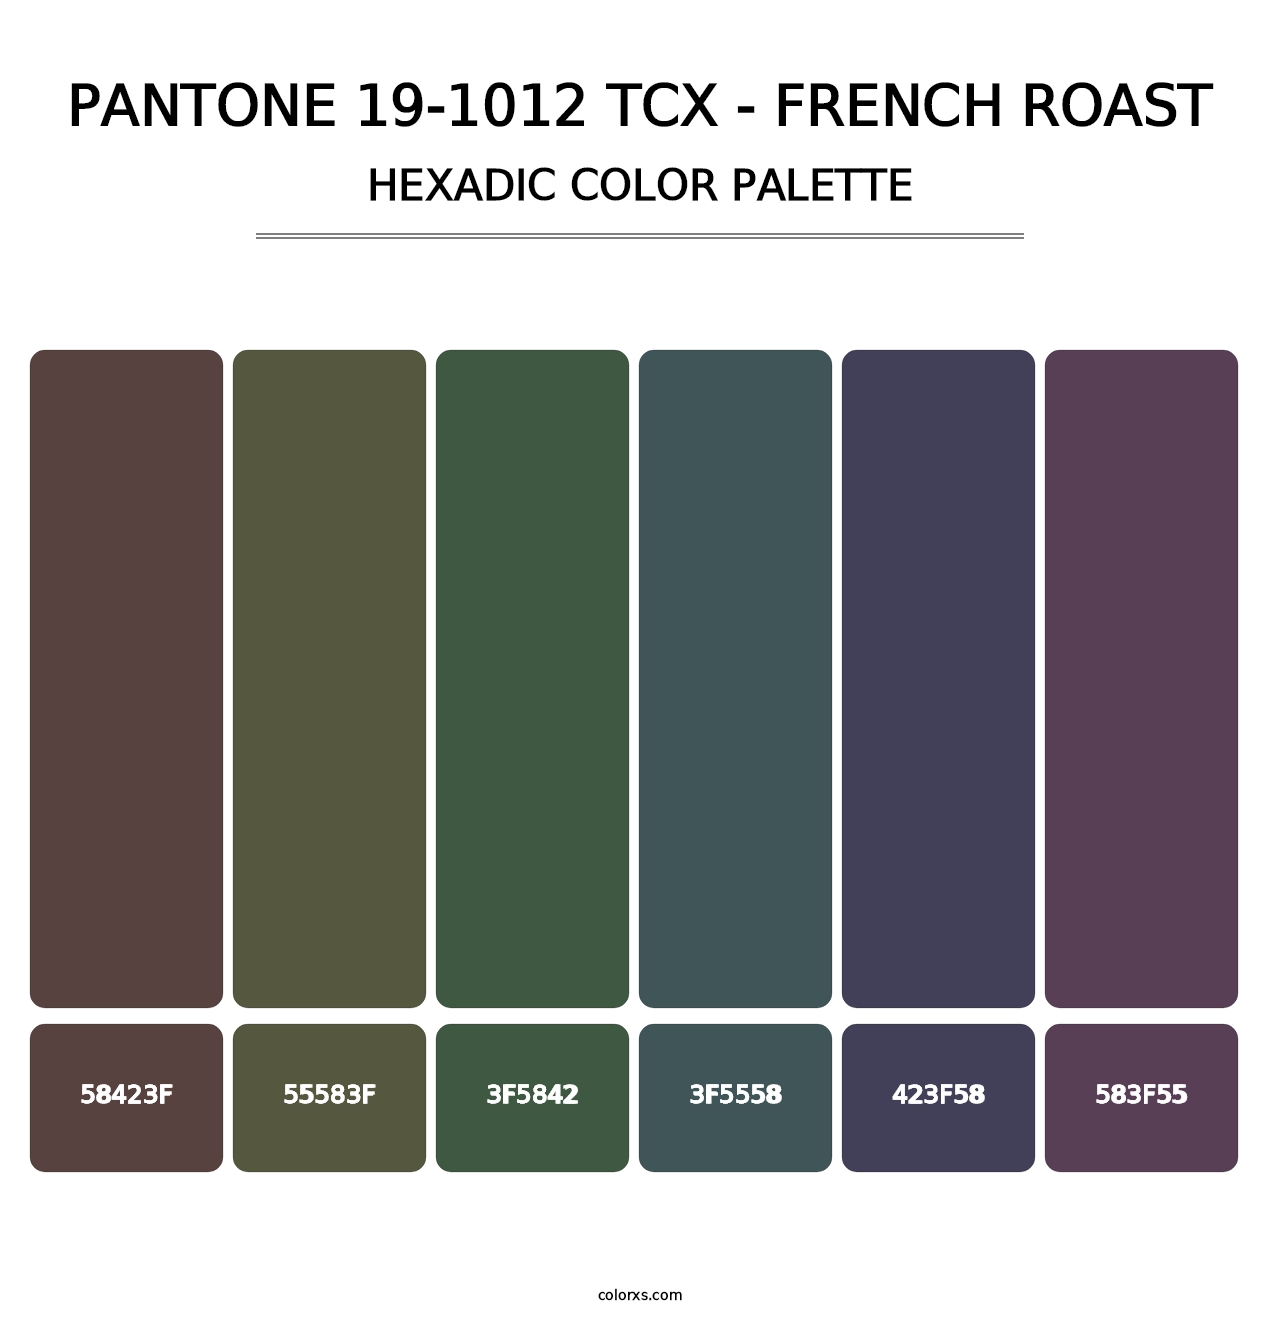 PANTONE 19-1012 TCX - French Roast - Hexadic Color Palette